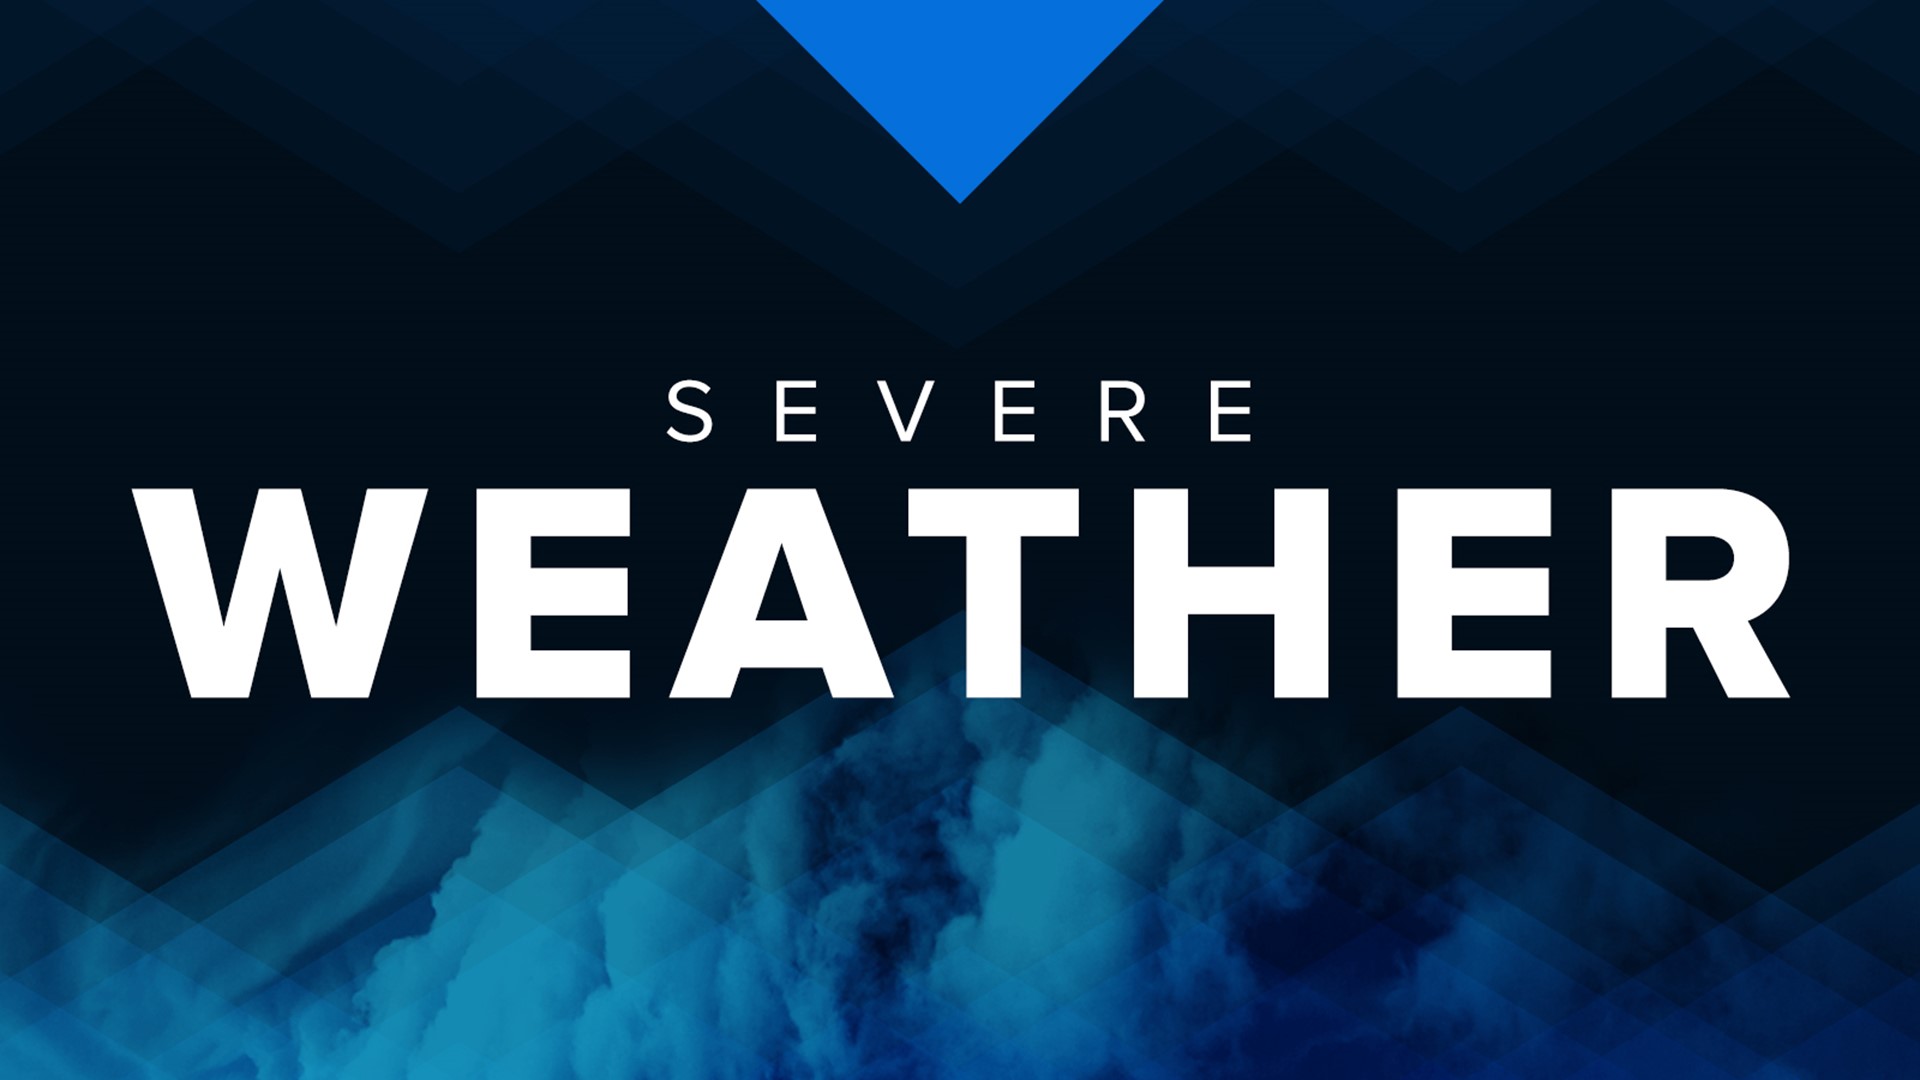 San Antonio and the surrounding region face threats of large hail and heavy rain Wednesday night.